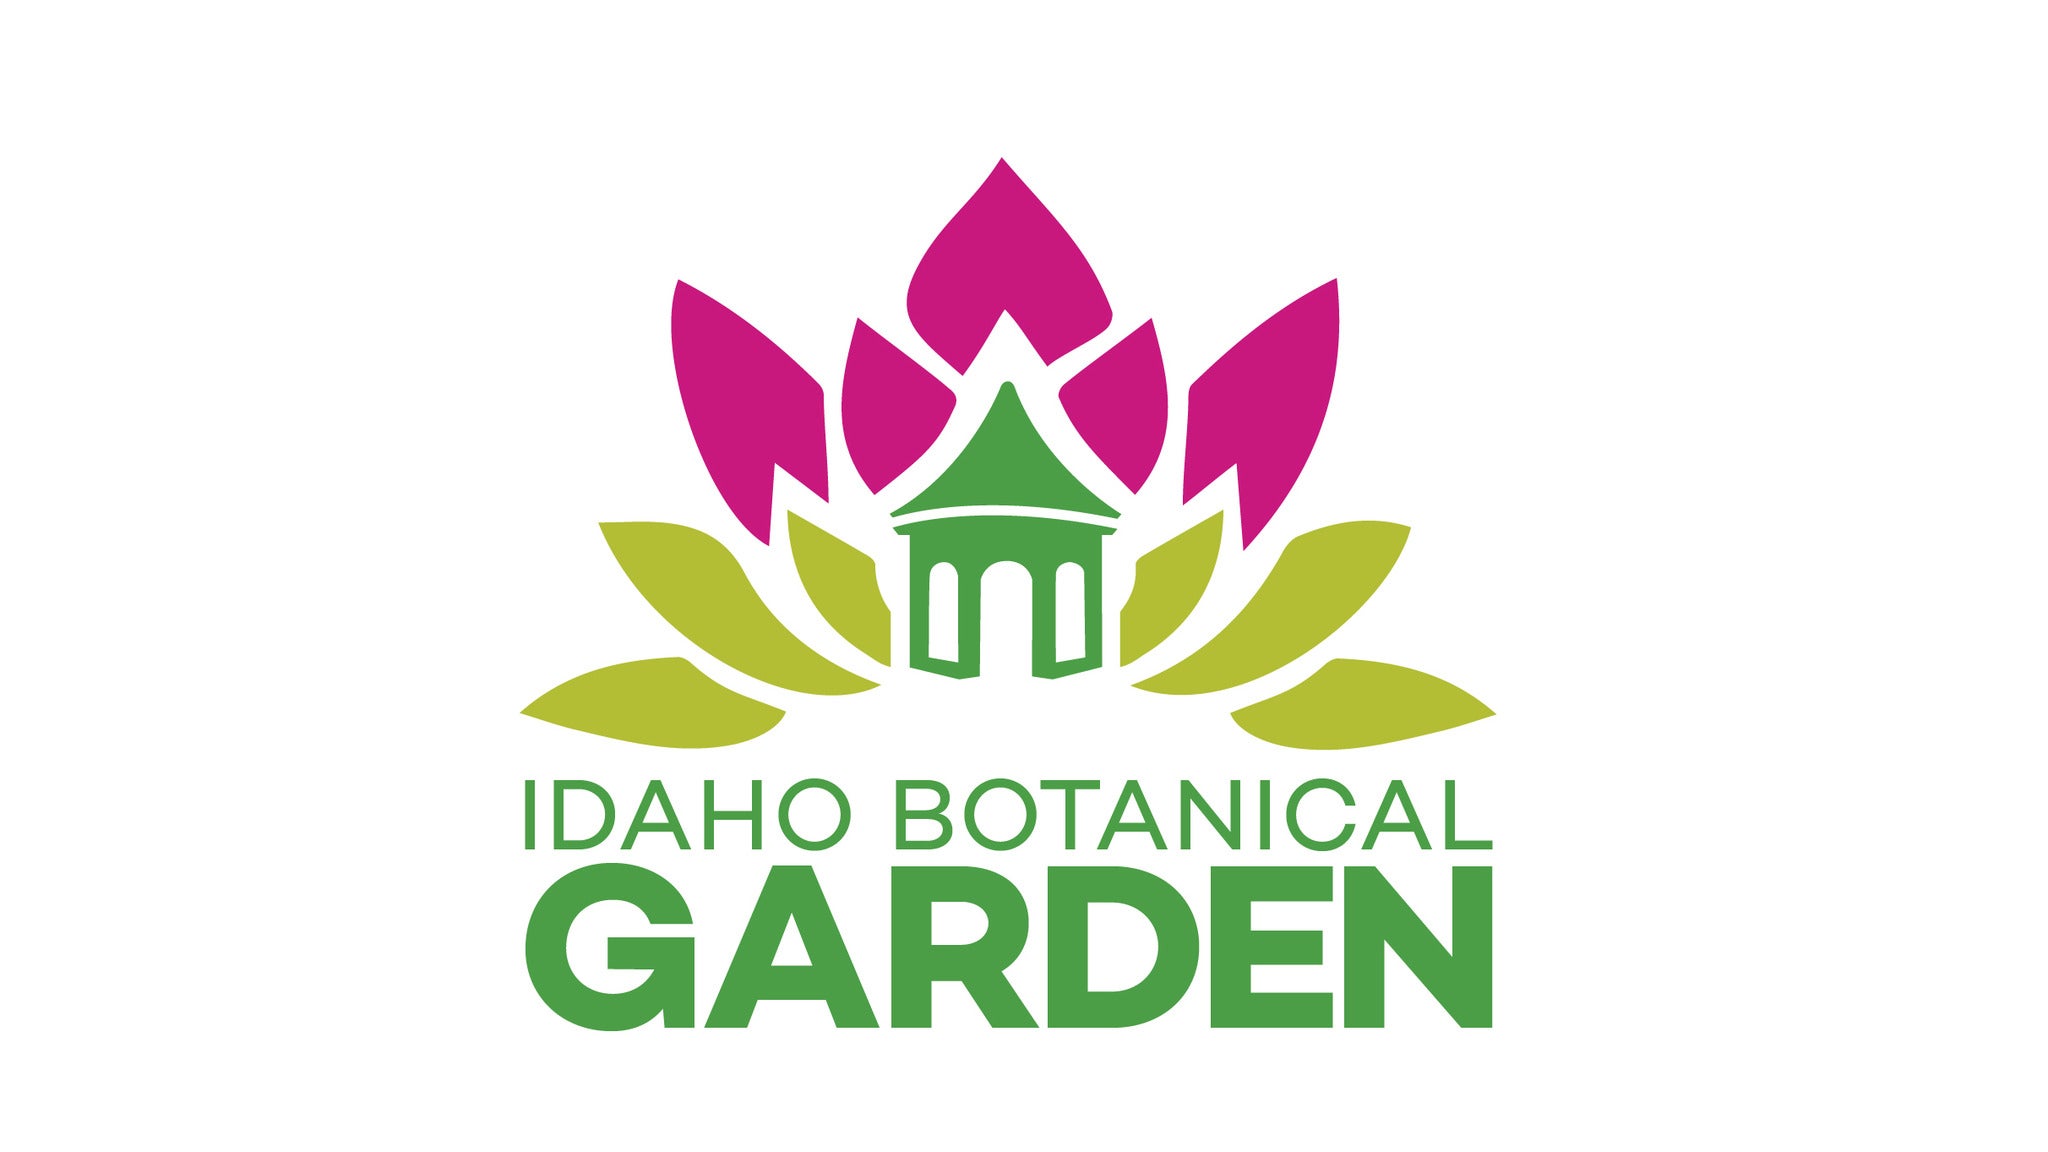 Idaho Botanical Garden Membership presale information on freepresalepasswords.com